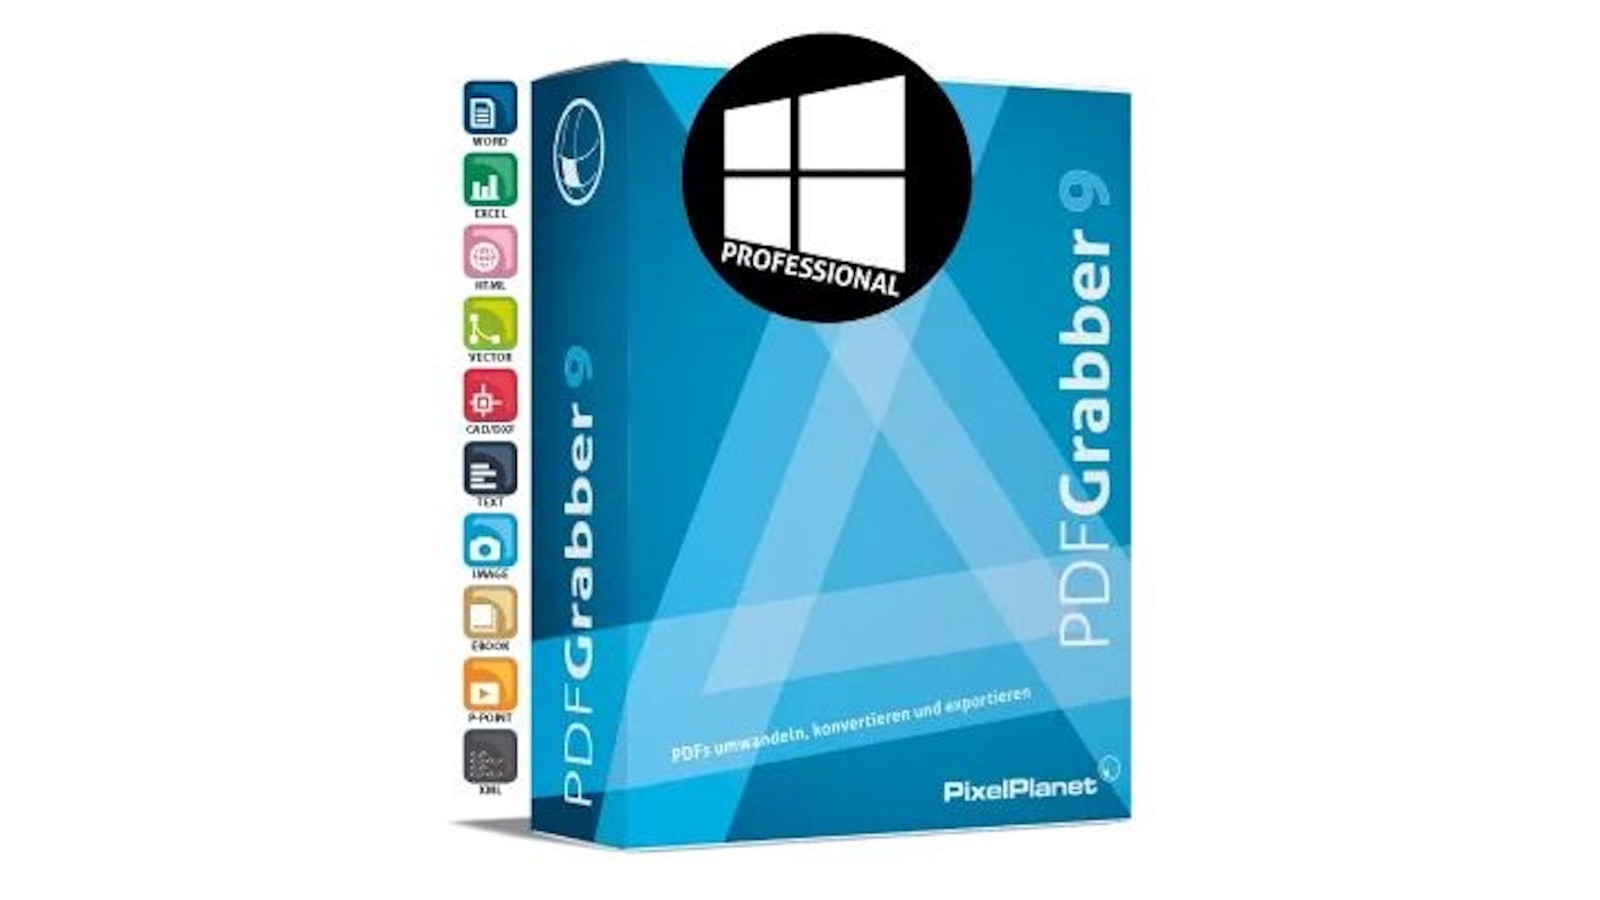 PixelPlanet PdfGrabber 9 Professional Network Licence Key (Lifetime / 5 Users), $7.74